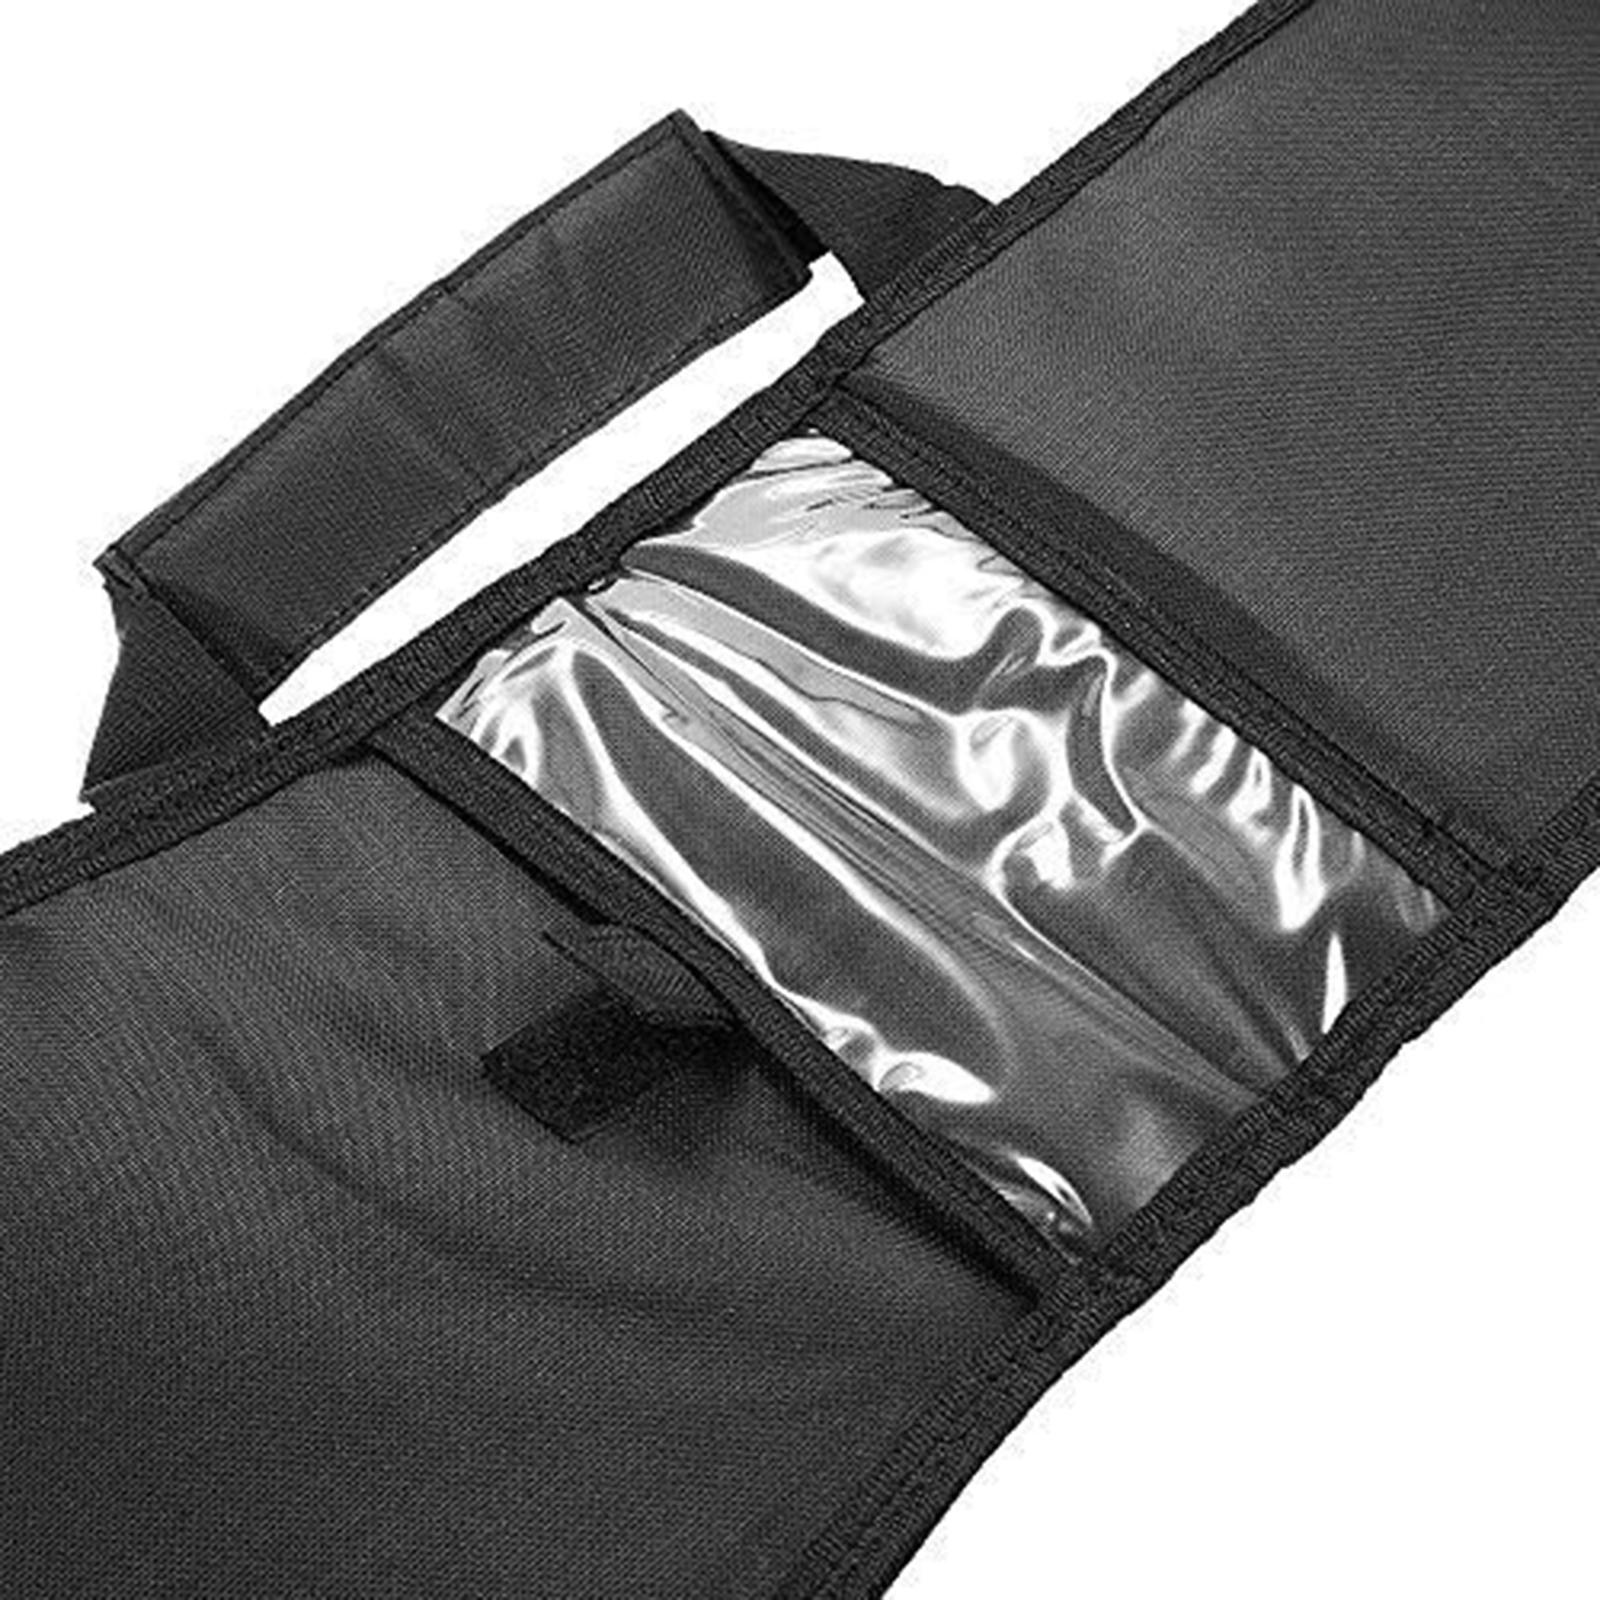 Portable Kayak Paddles Bag Water Resistant Adjustable Shoulder Strap Protective Kayak Paddles Storage Bag for Kayaki